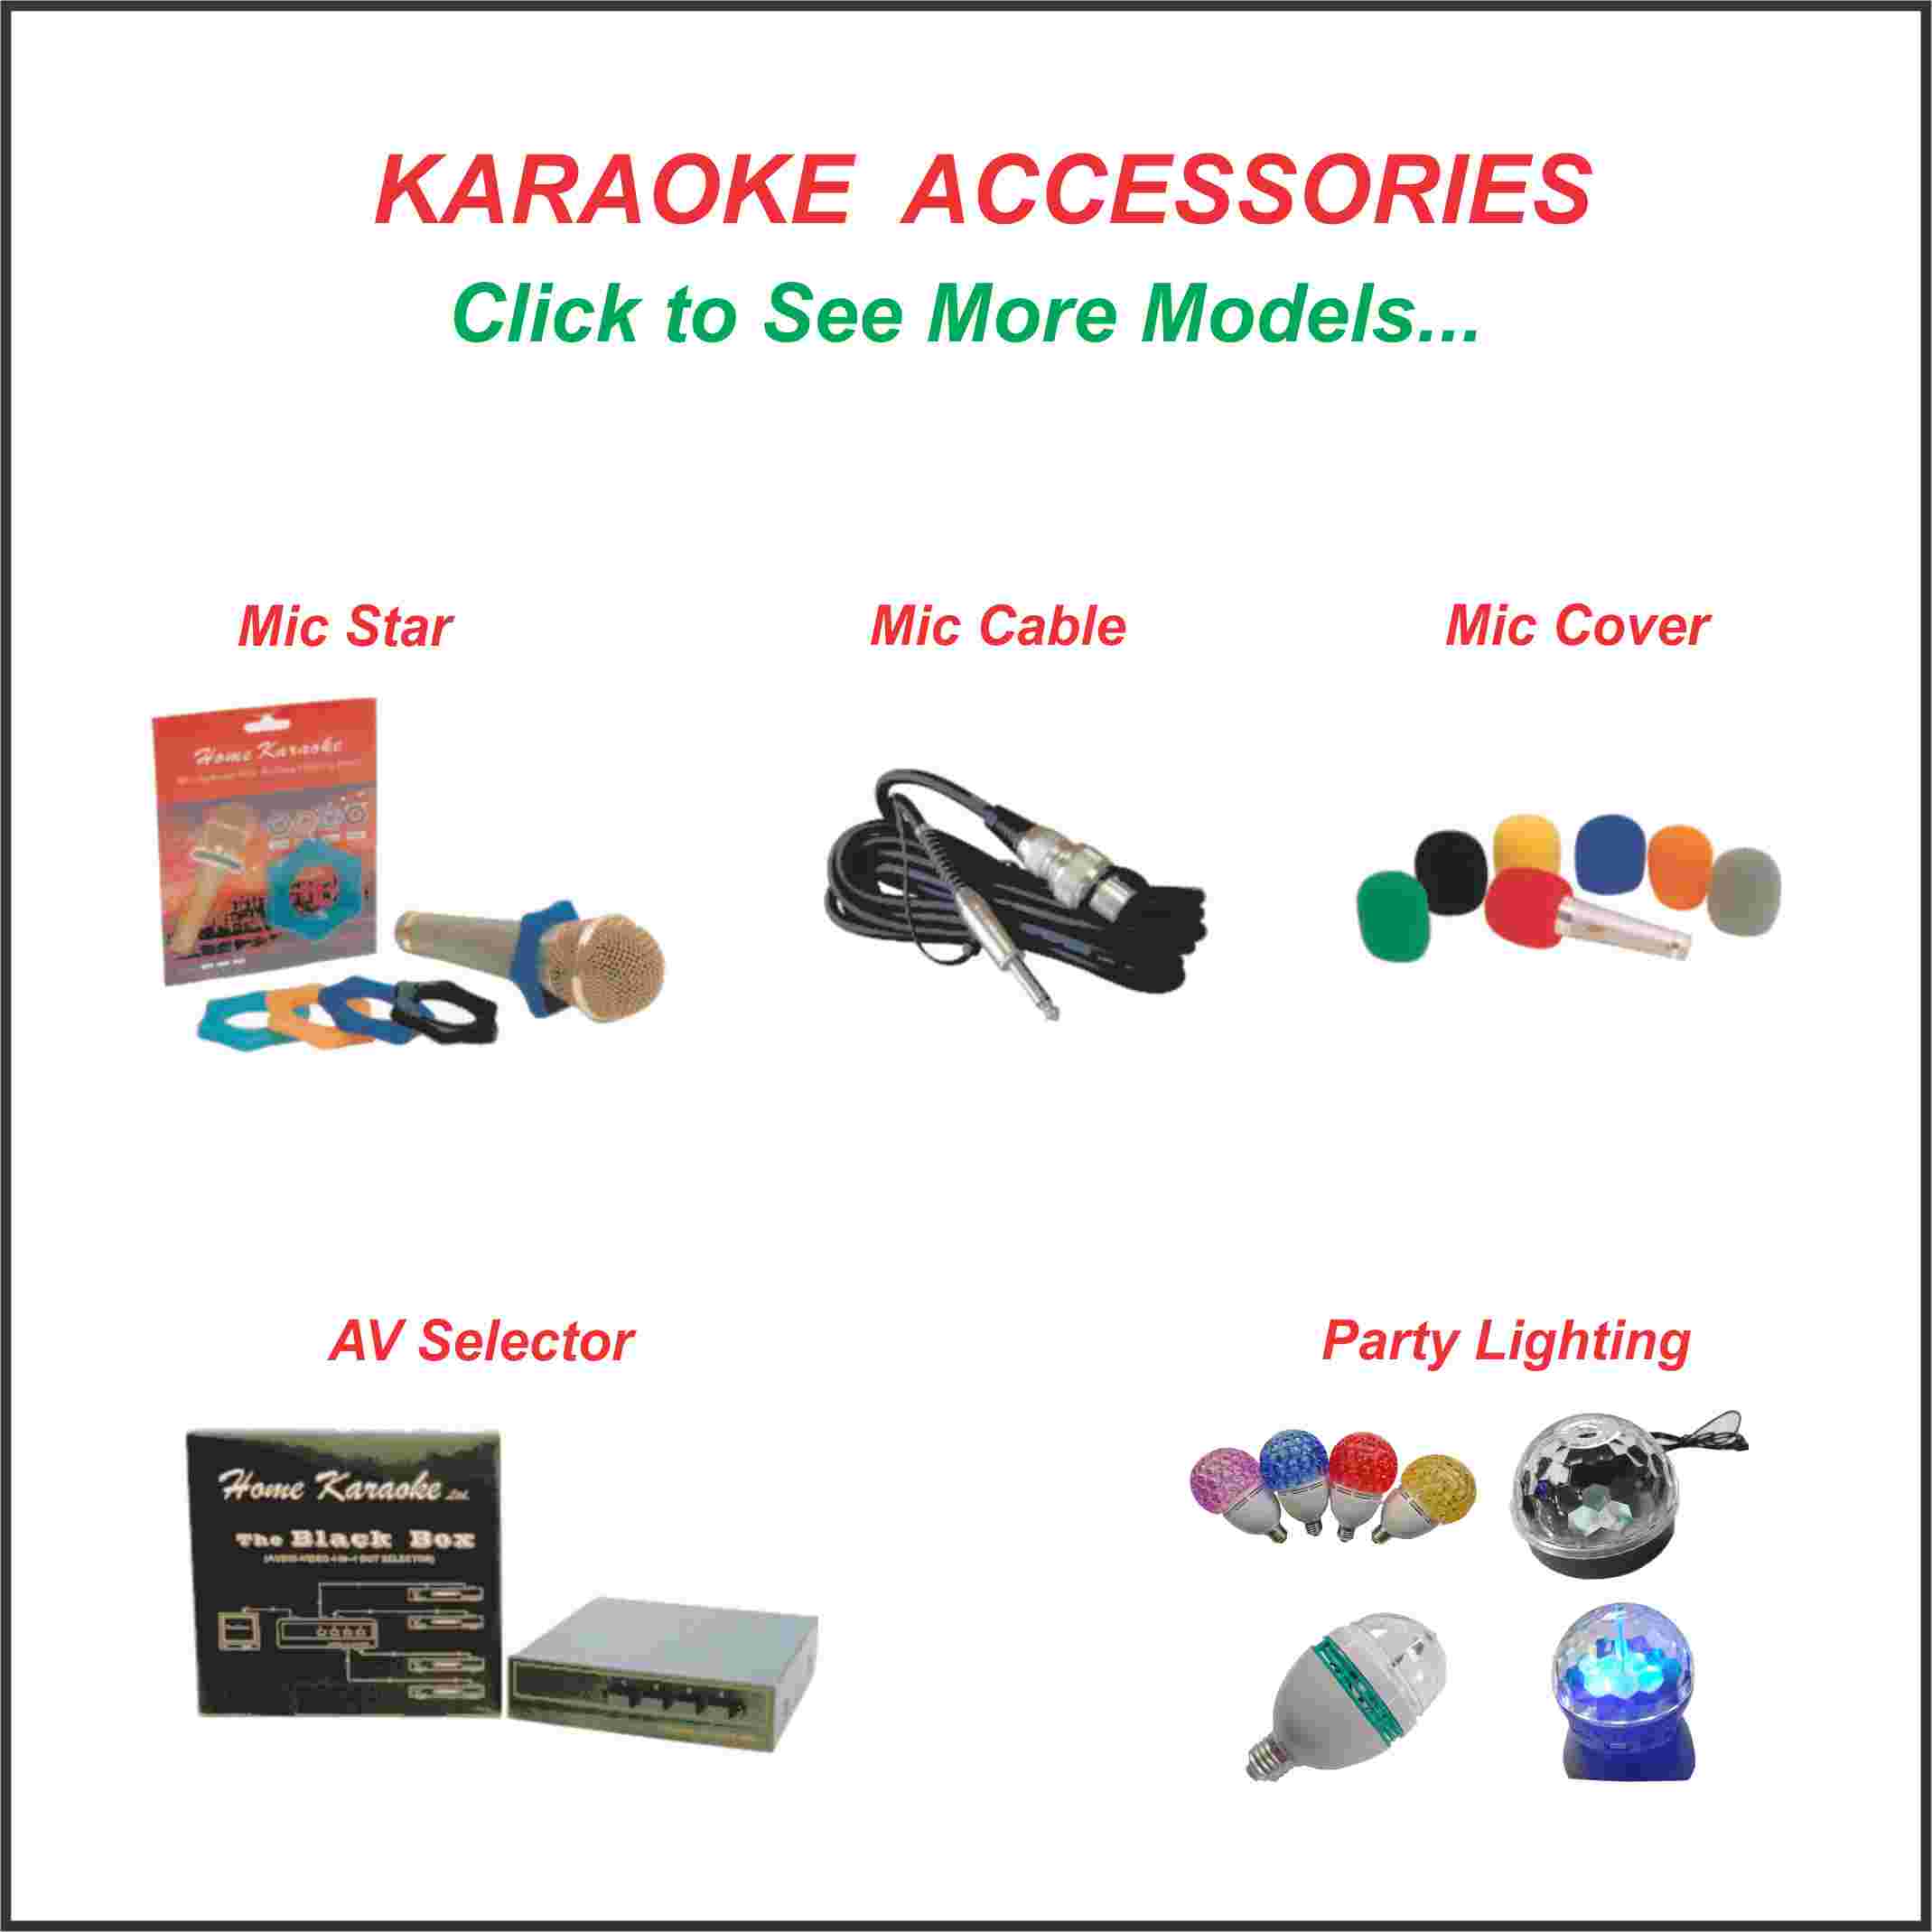 Karaoke Accessories